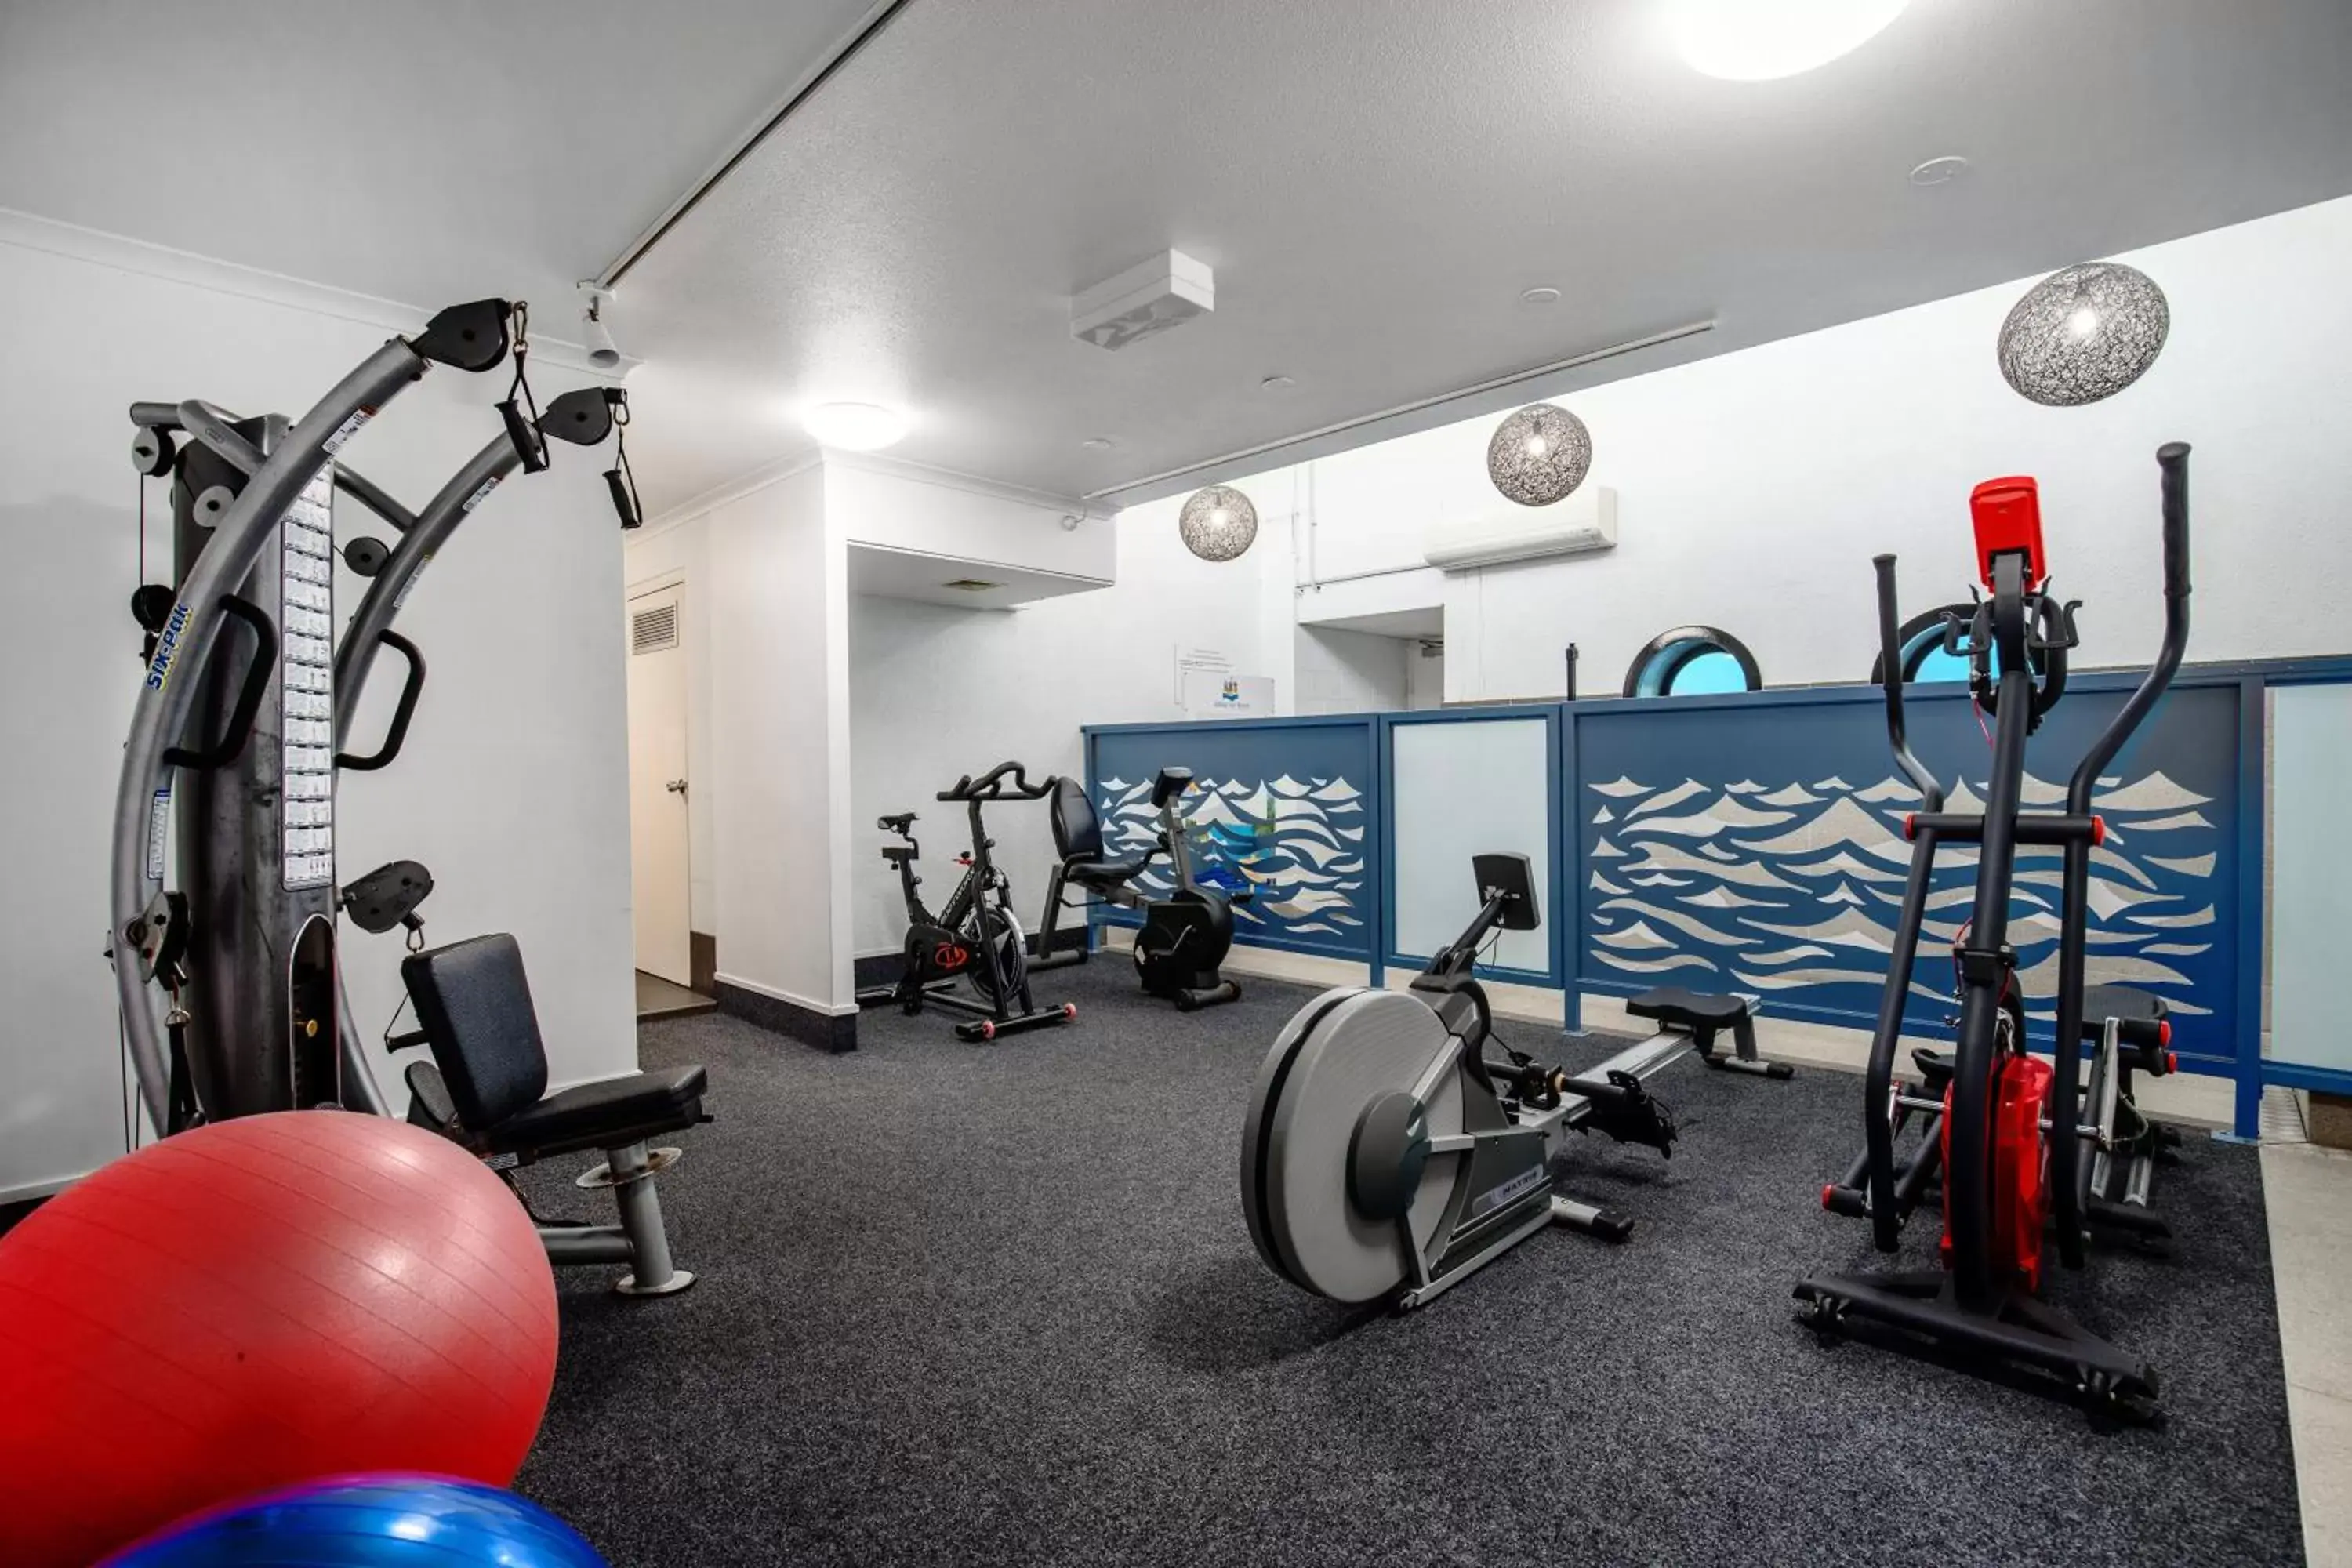 Fitness centre/facilities, Fitness Center/Facilities in Rolling Surf Resort